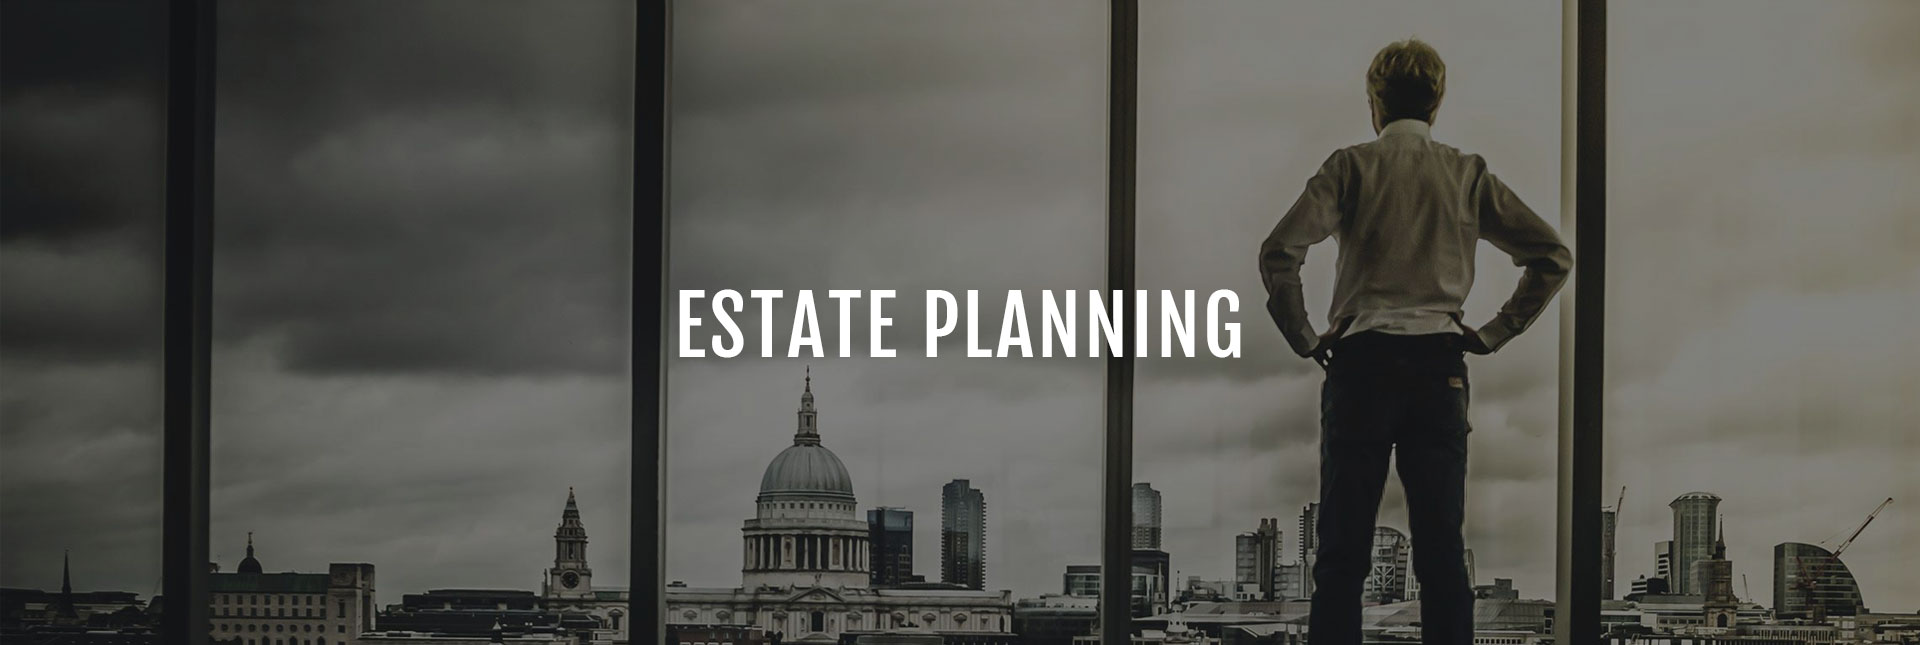 executor of estates, trusts, wills, estate planning